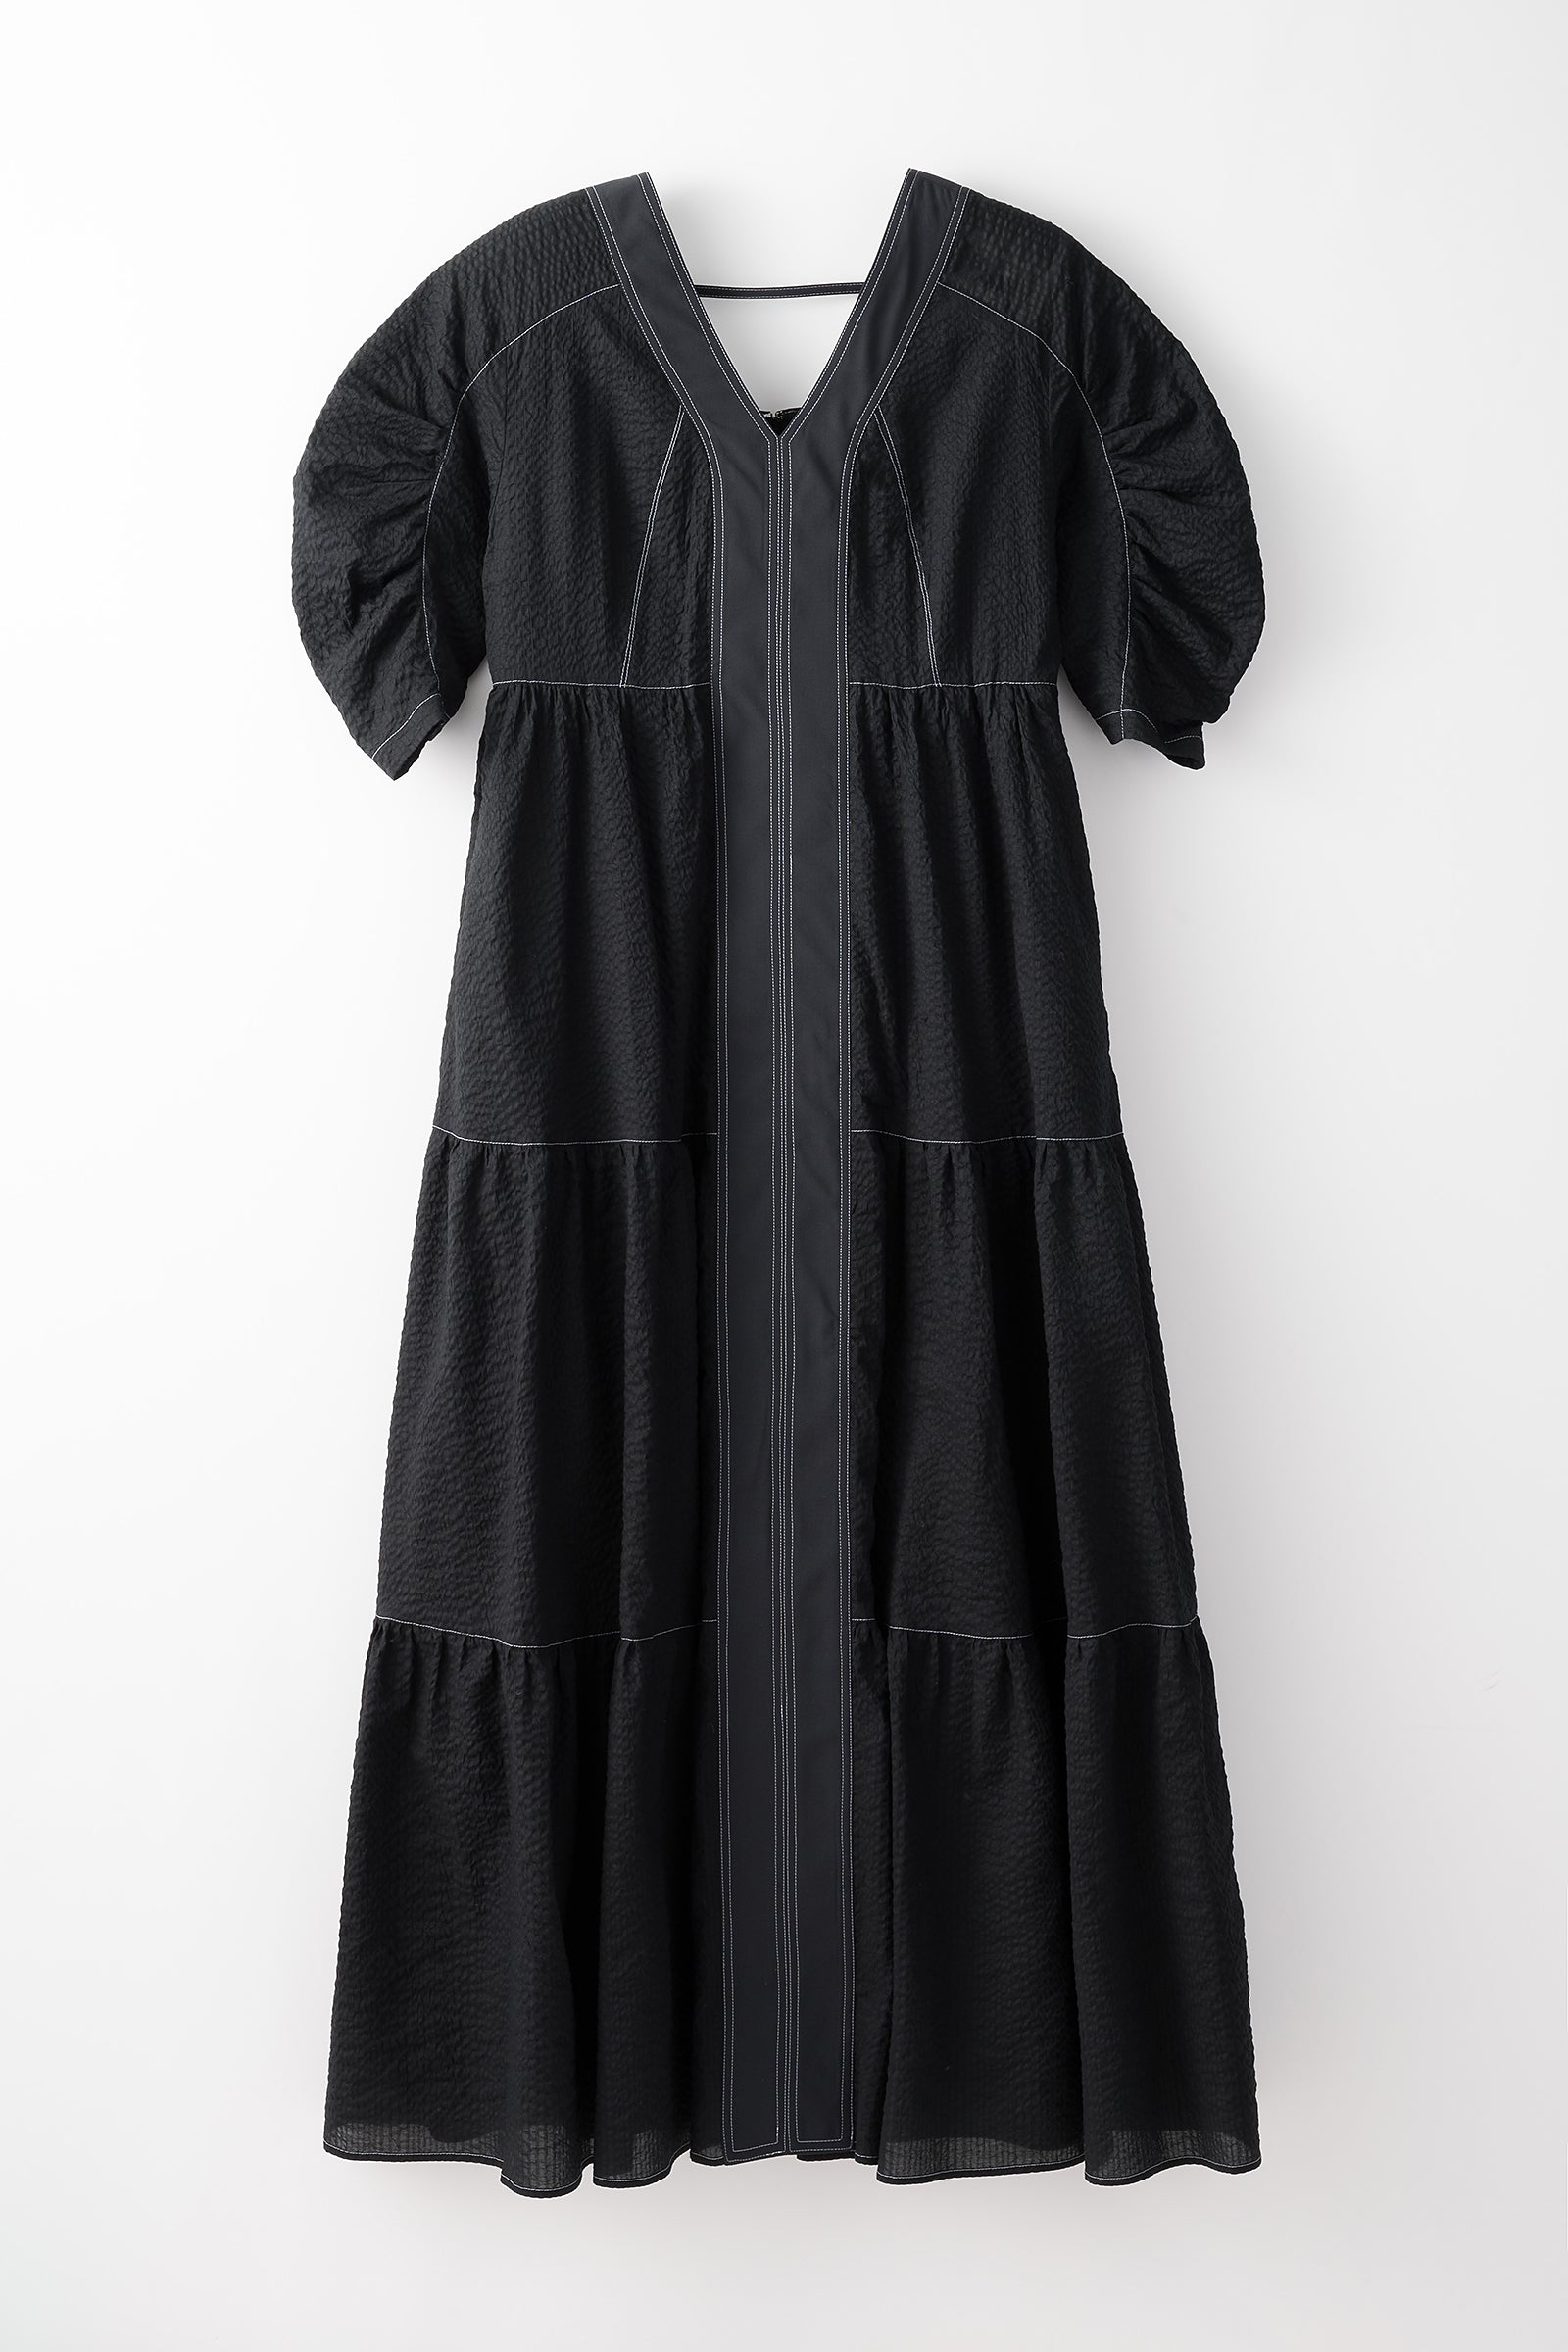 Wave cotton tiered dress(Black)